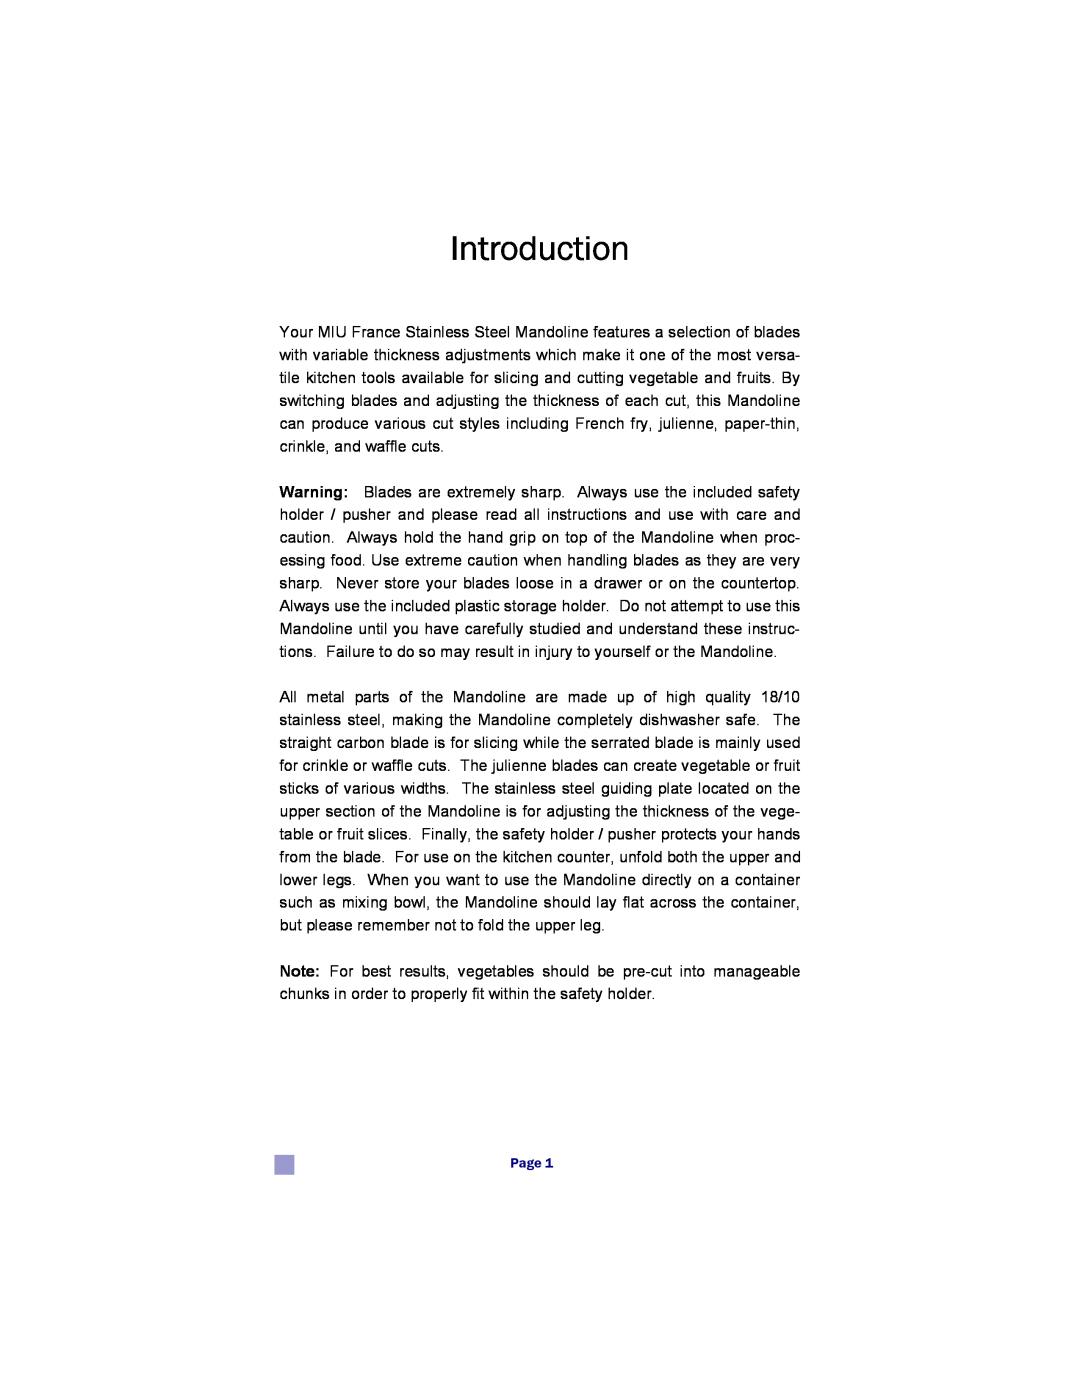 MIU France 90777 manual Introduction, Page 